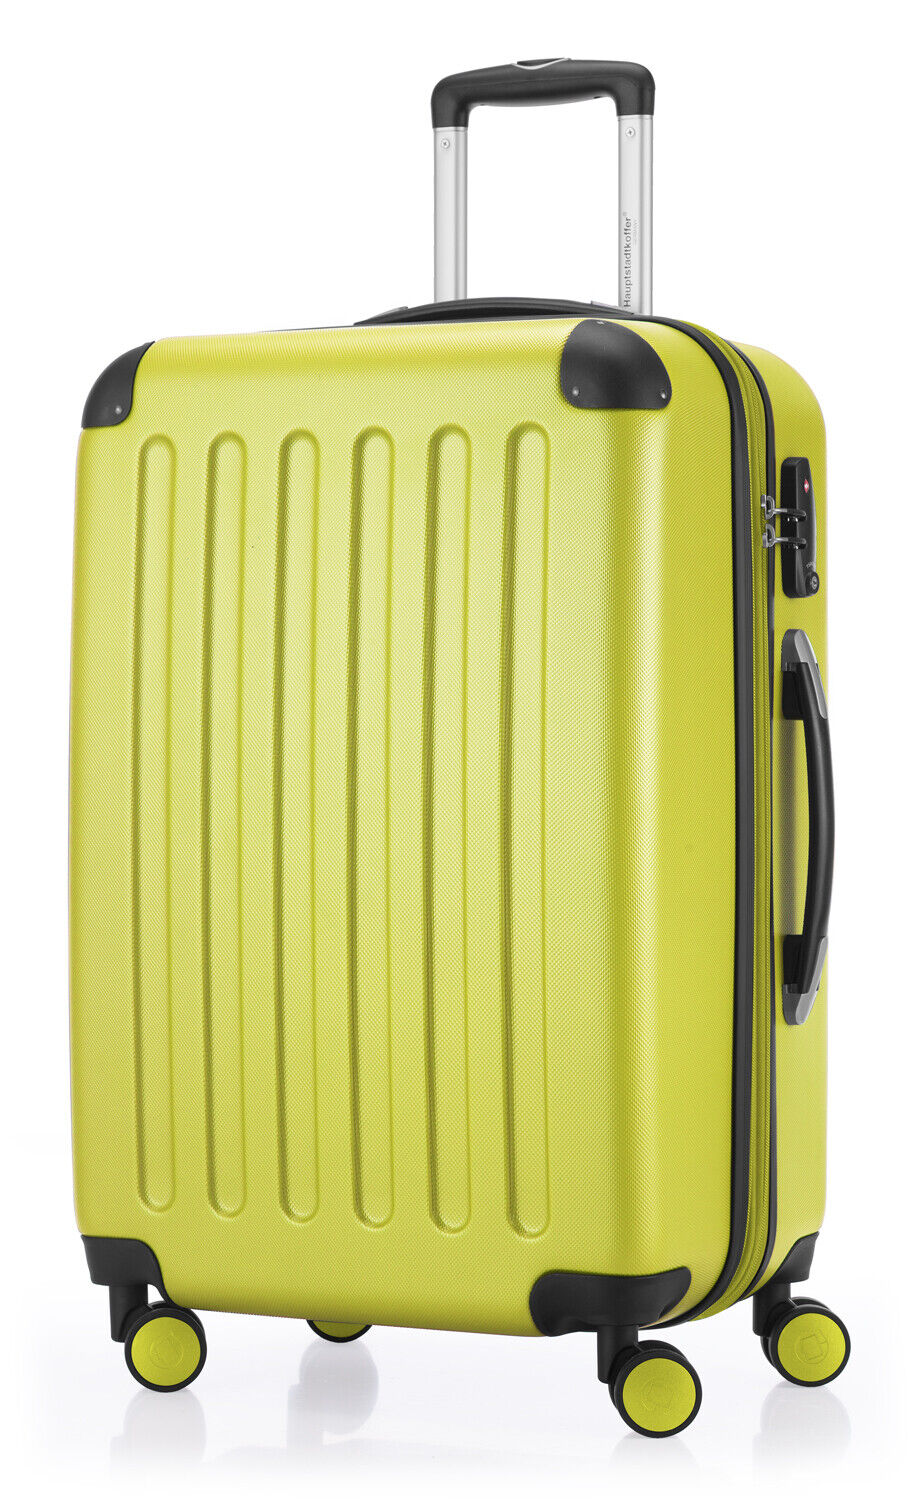 Spree Hauptstadtkoffer Luggage Suitcase Hardside Spinner Trolley 4 Wheel 65cm Tania okazja, prawdziwa gwarancja